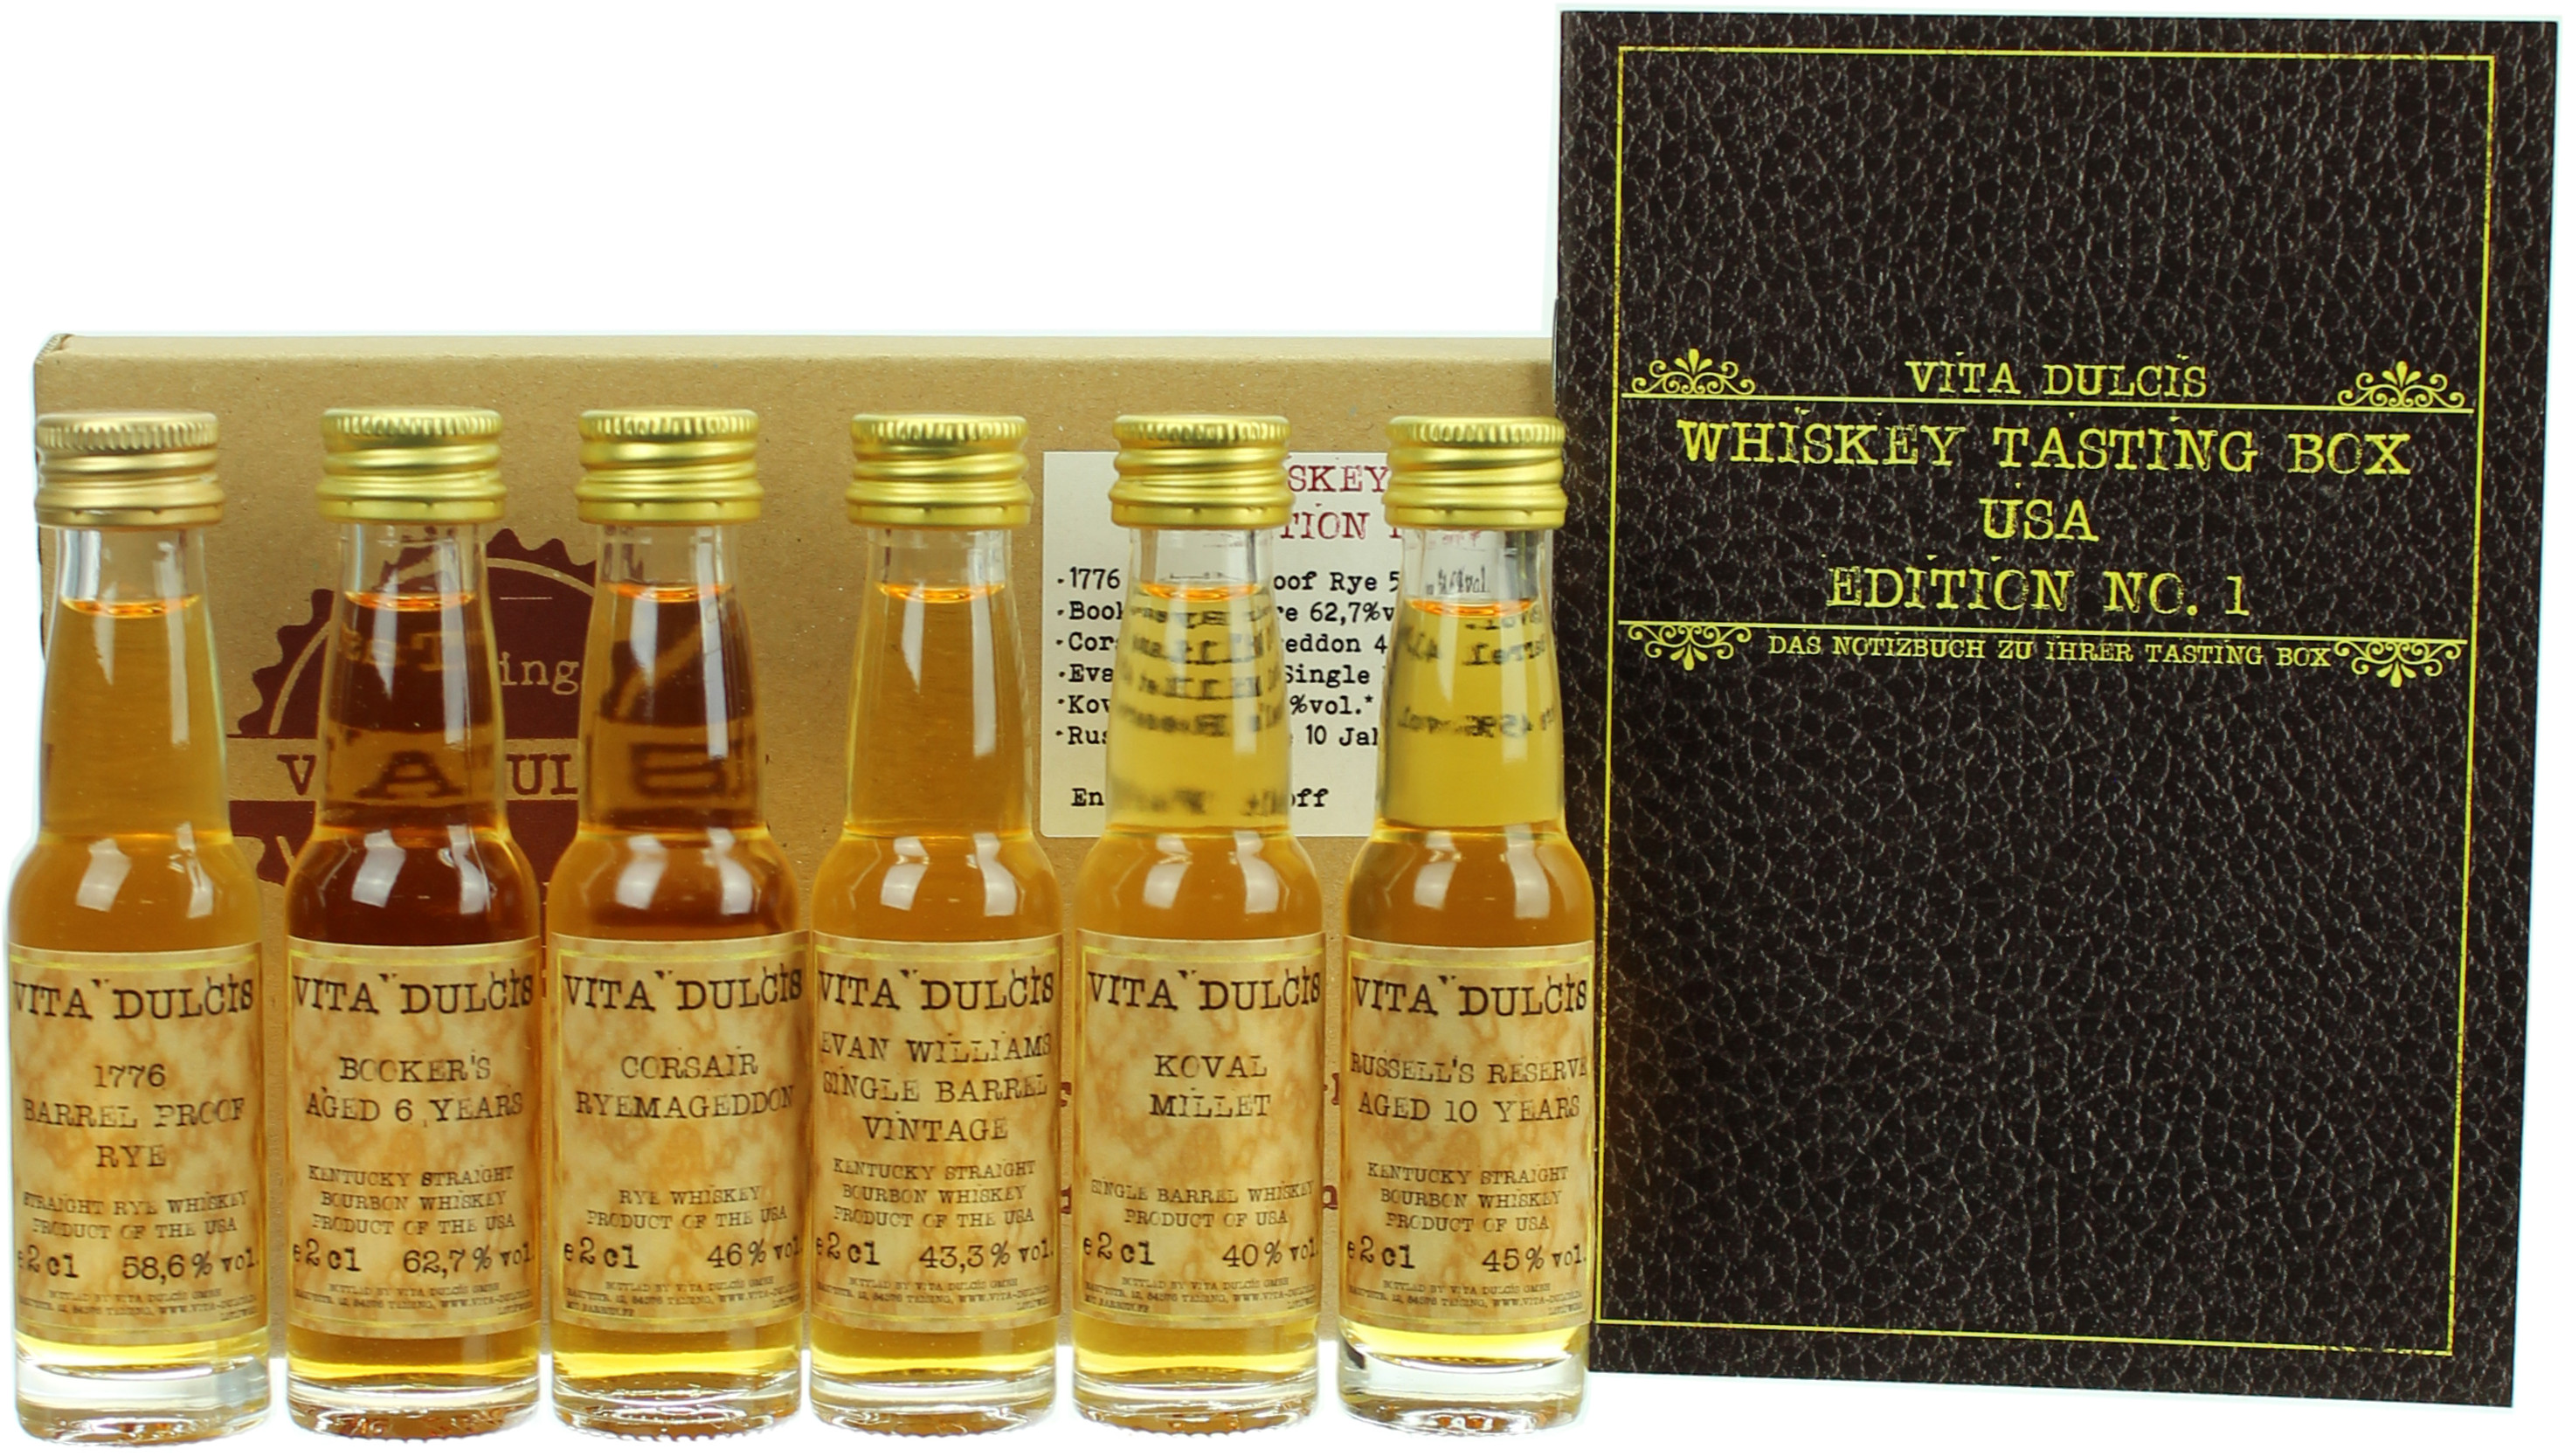 Whisky Tasting-Box "USA" 49,27% 6x20ml